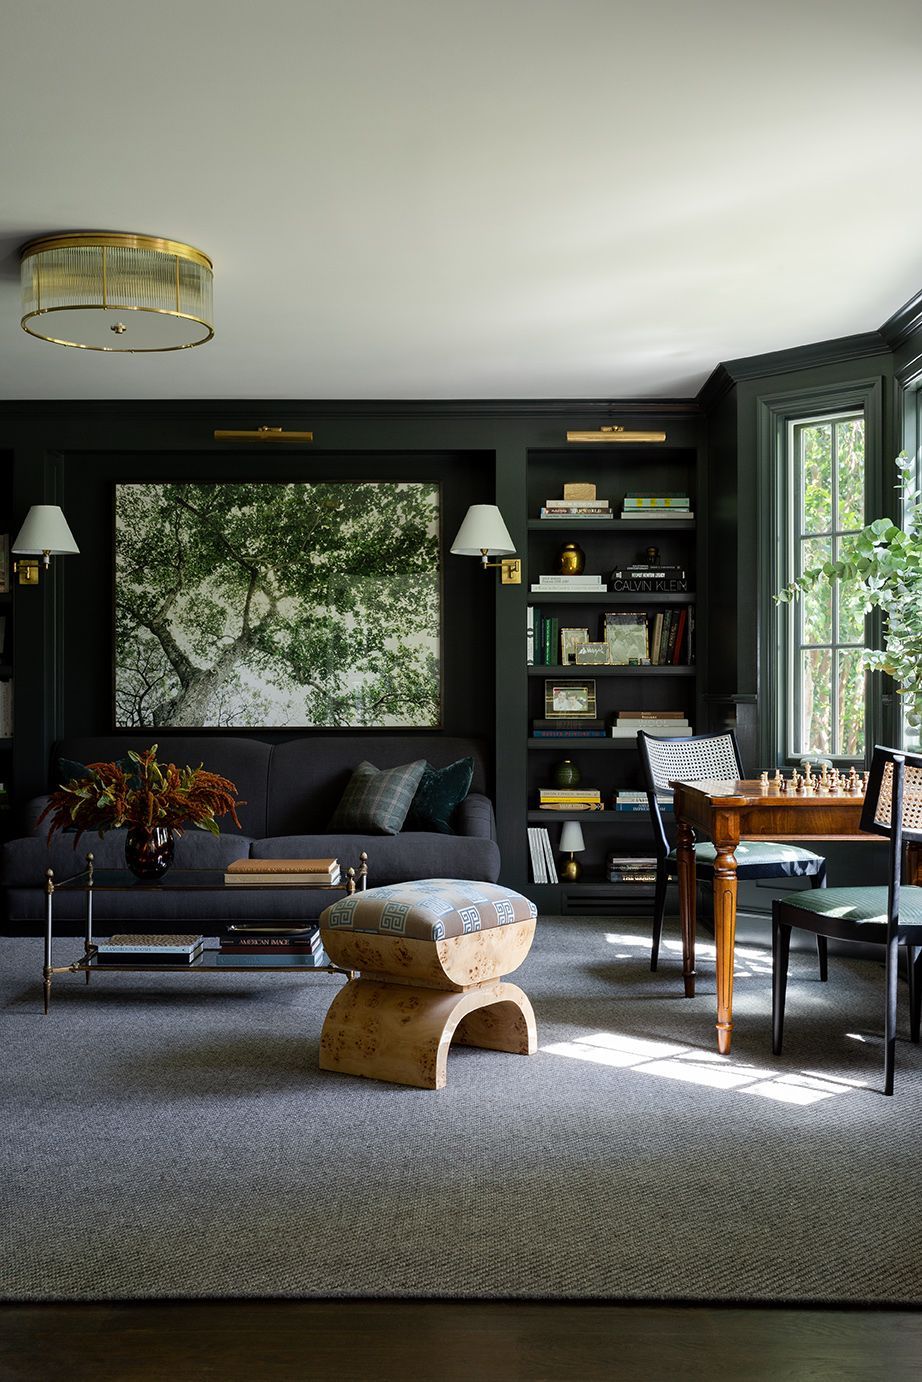 Living Room Design Ideas - Home Decorating and Furniture - HomeLane